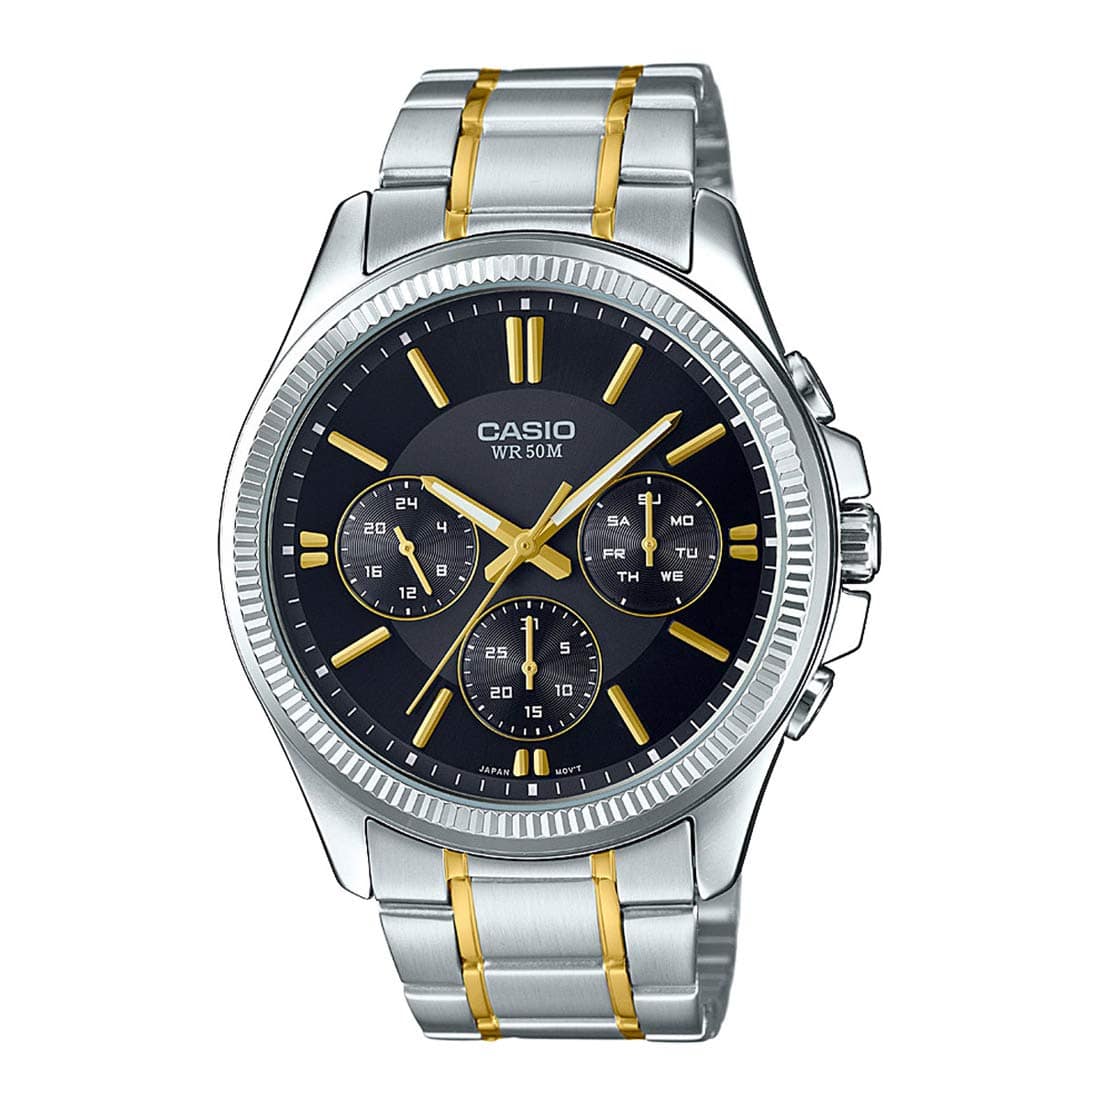 Casio stainless steel watch